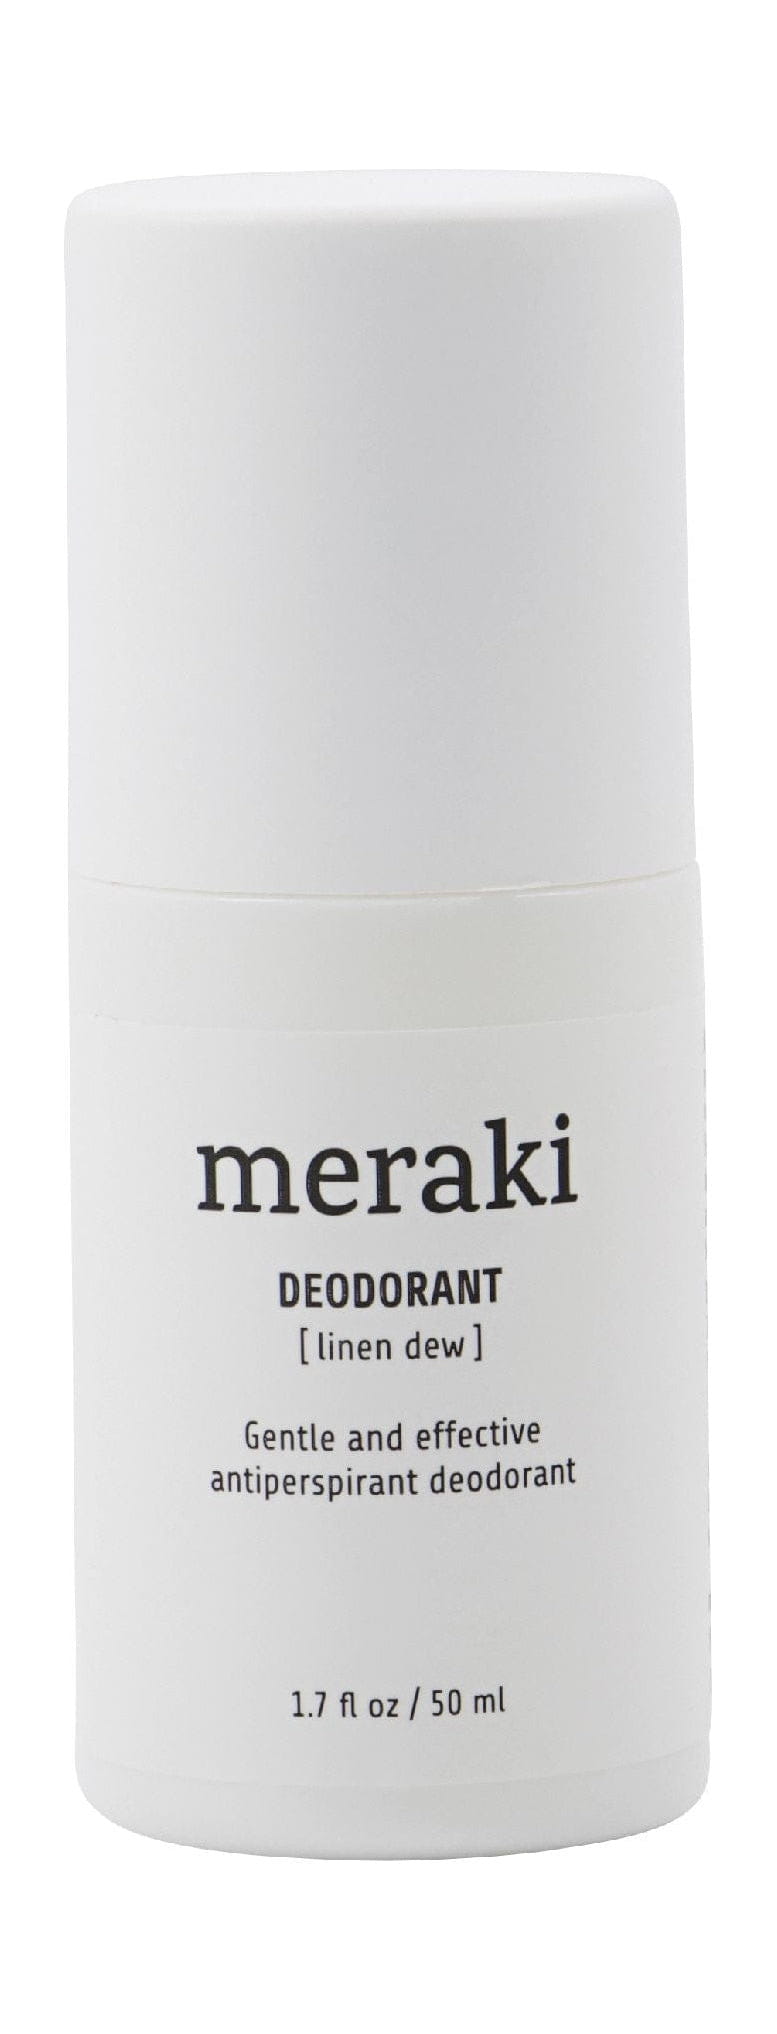 Desodorante de Meraki 50 ml, rocío de lino